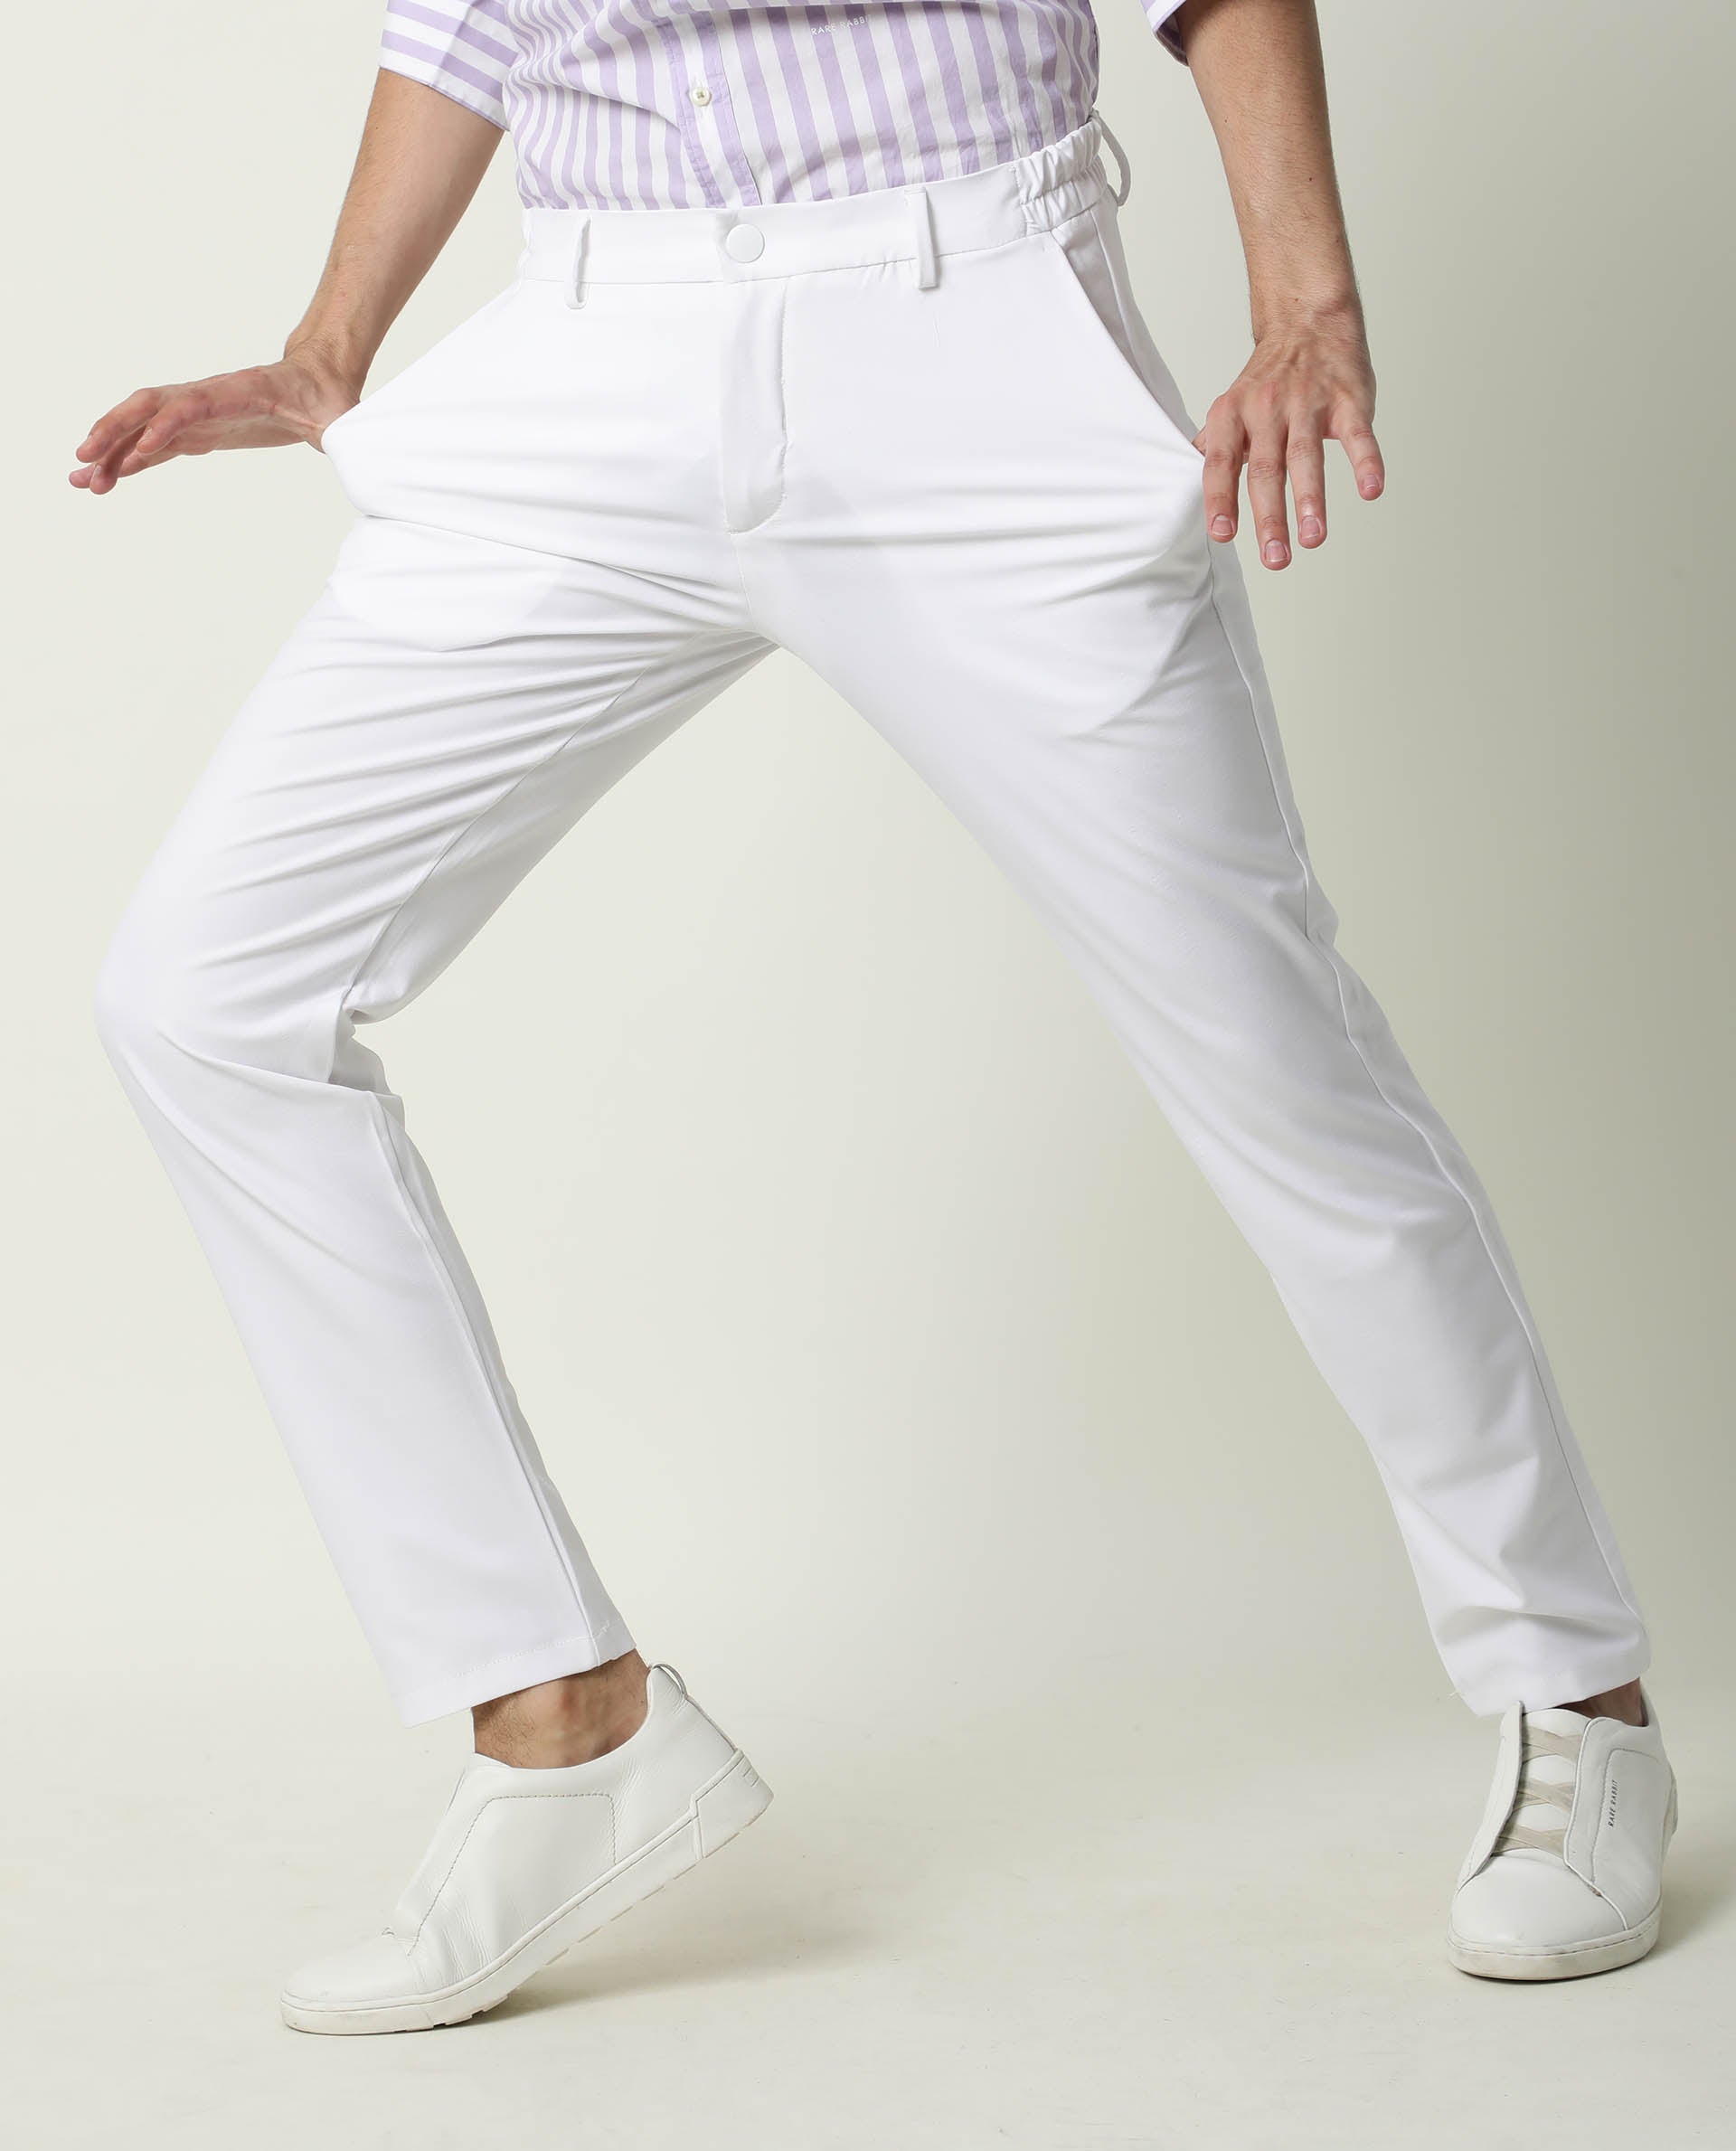 Urbano Fashion Men's Slim Fit Jeans (jog-white-uf-28-fba) : Amazon.in:  Clothing & Accessories